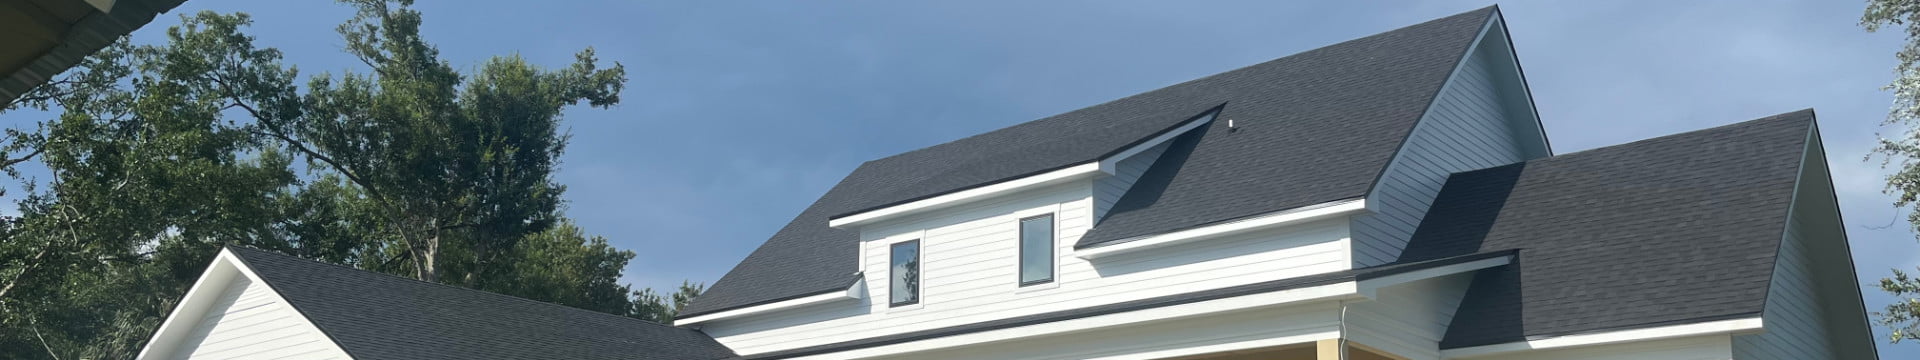 Hall Roofing Company - Gulf County Florida shingles